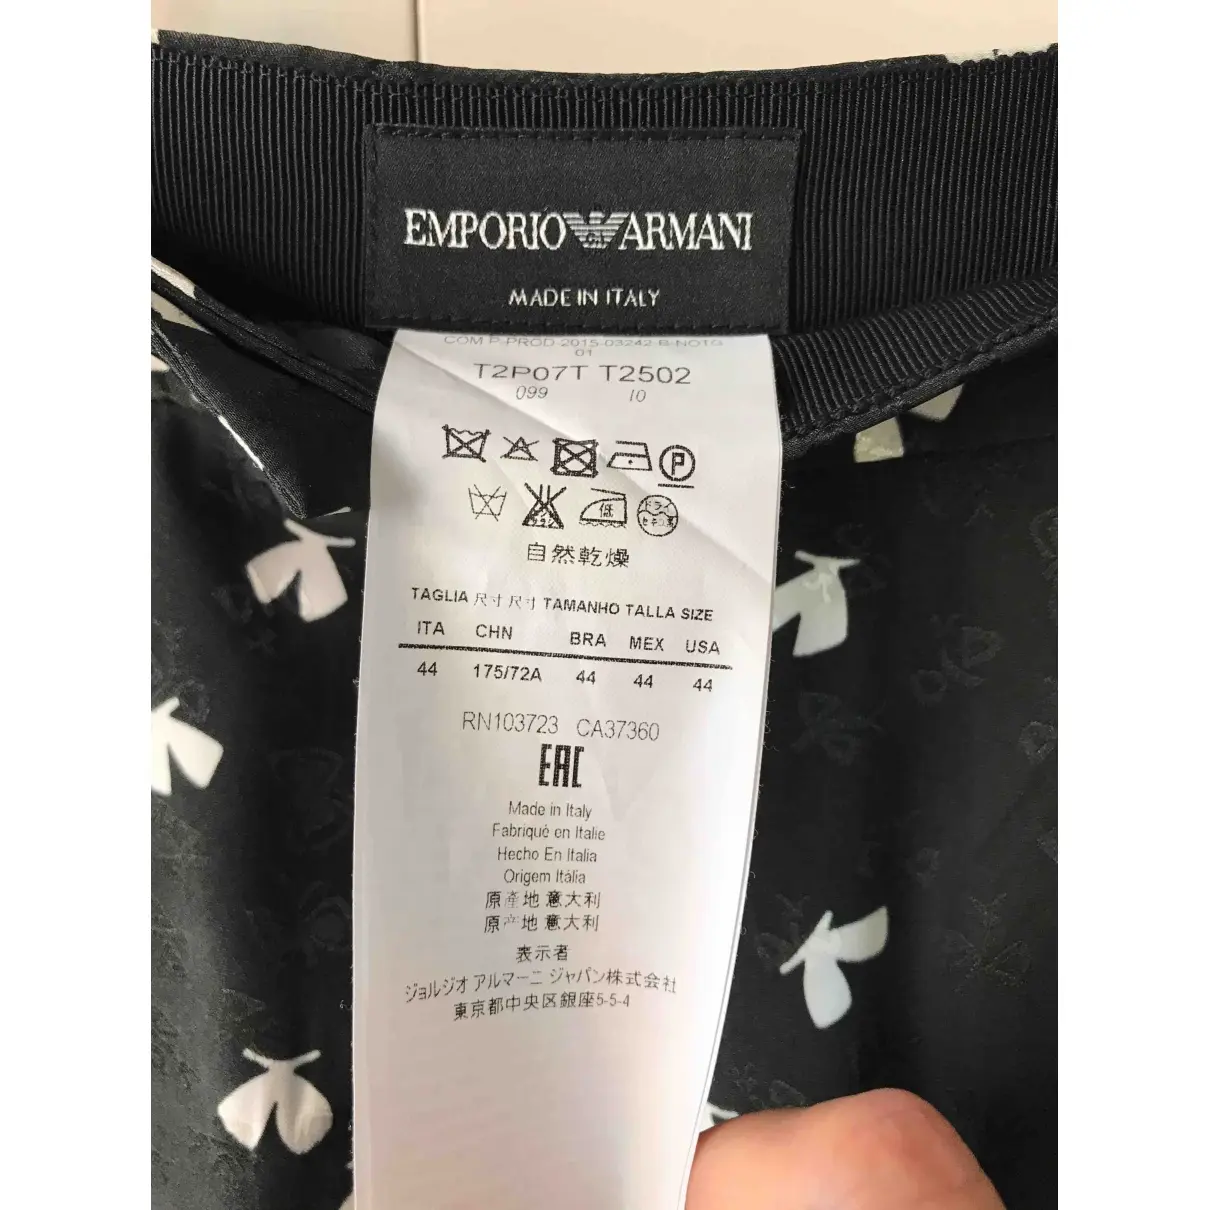 Buy Emporio Armani Trousers online